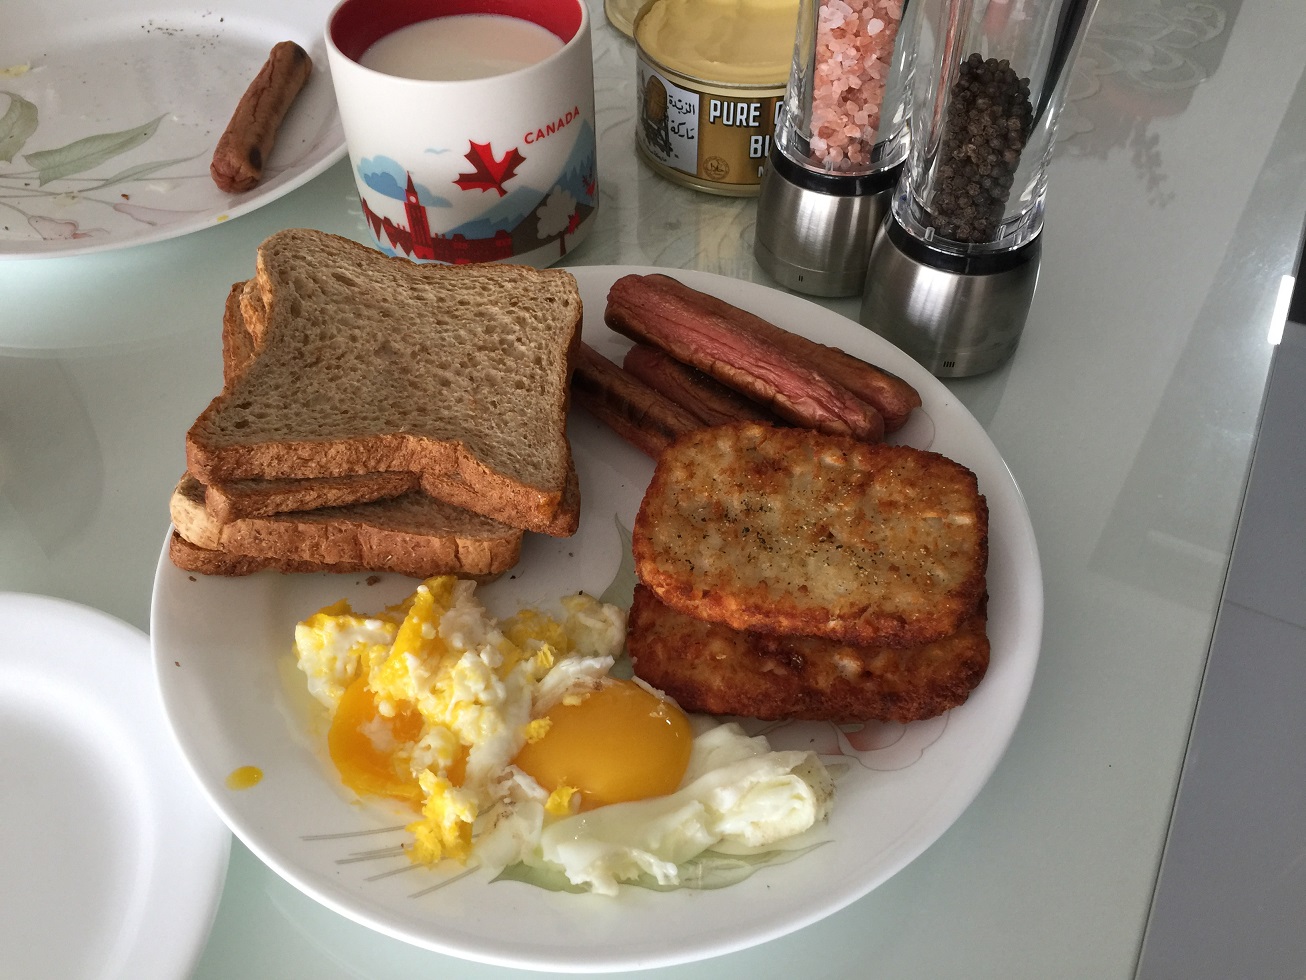 Self made breakfast!